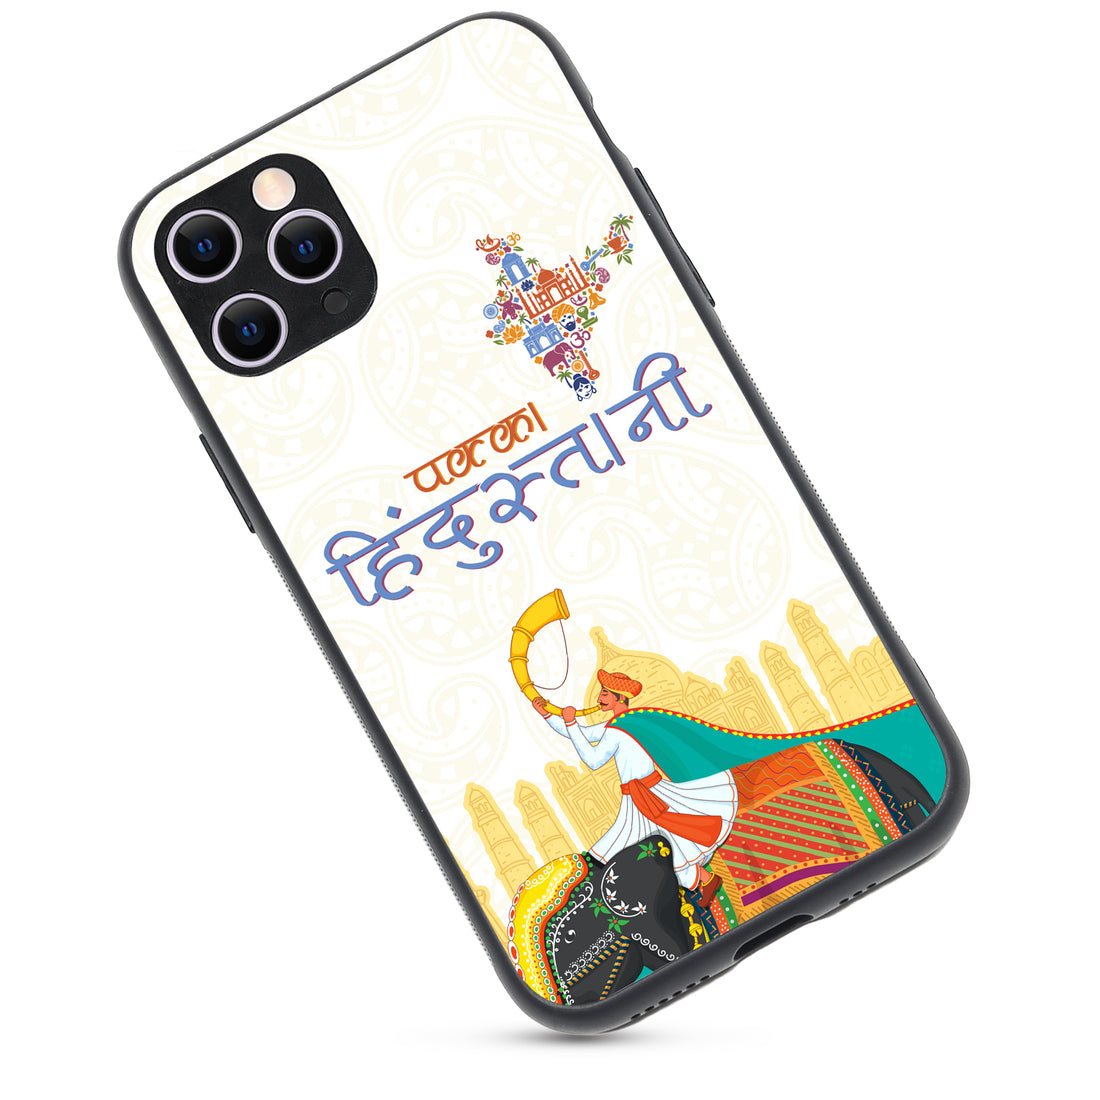 Pakka Hindustani Indian iPhone 11 Pro Case